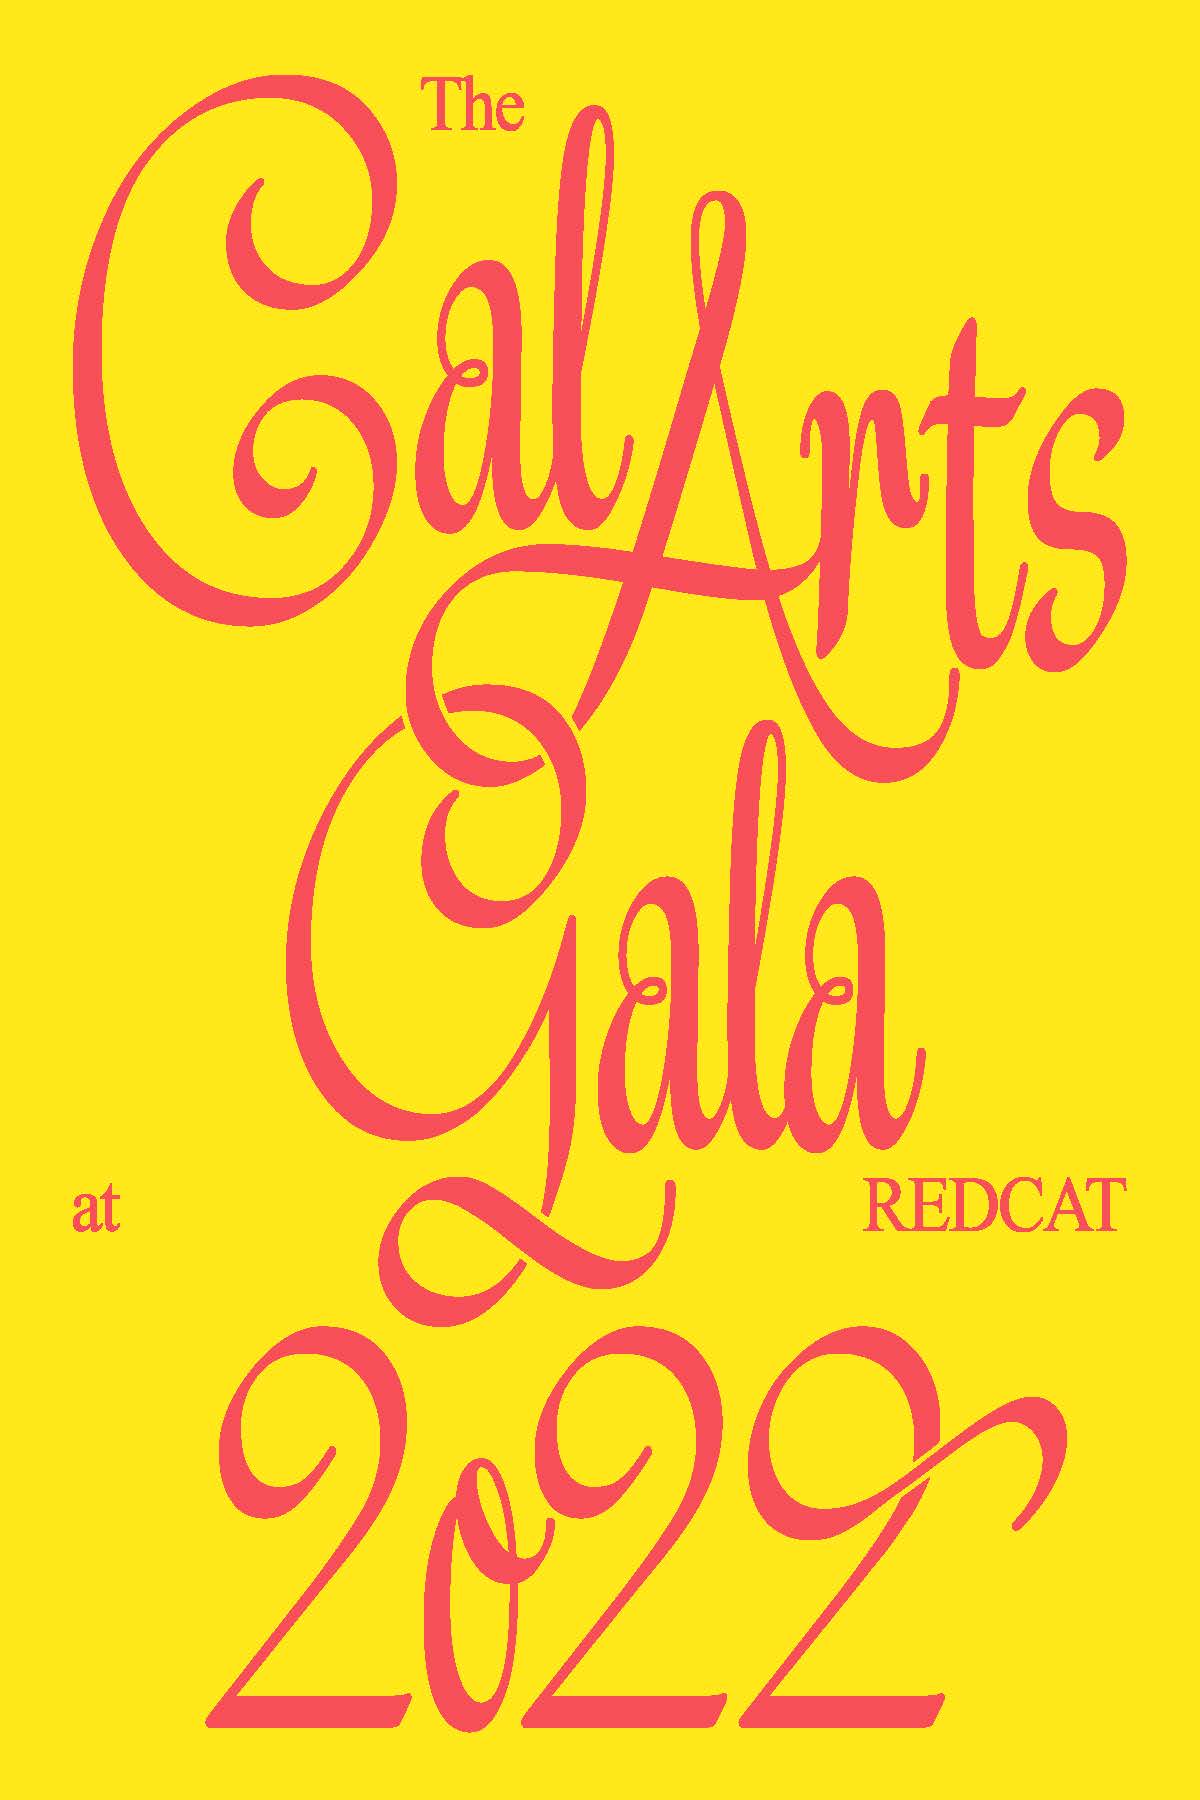 Save the Date - the CalArts Gala at REDCAT - May 14